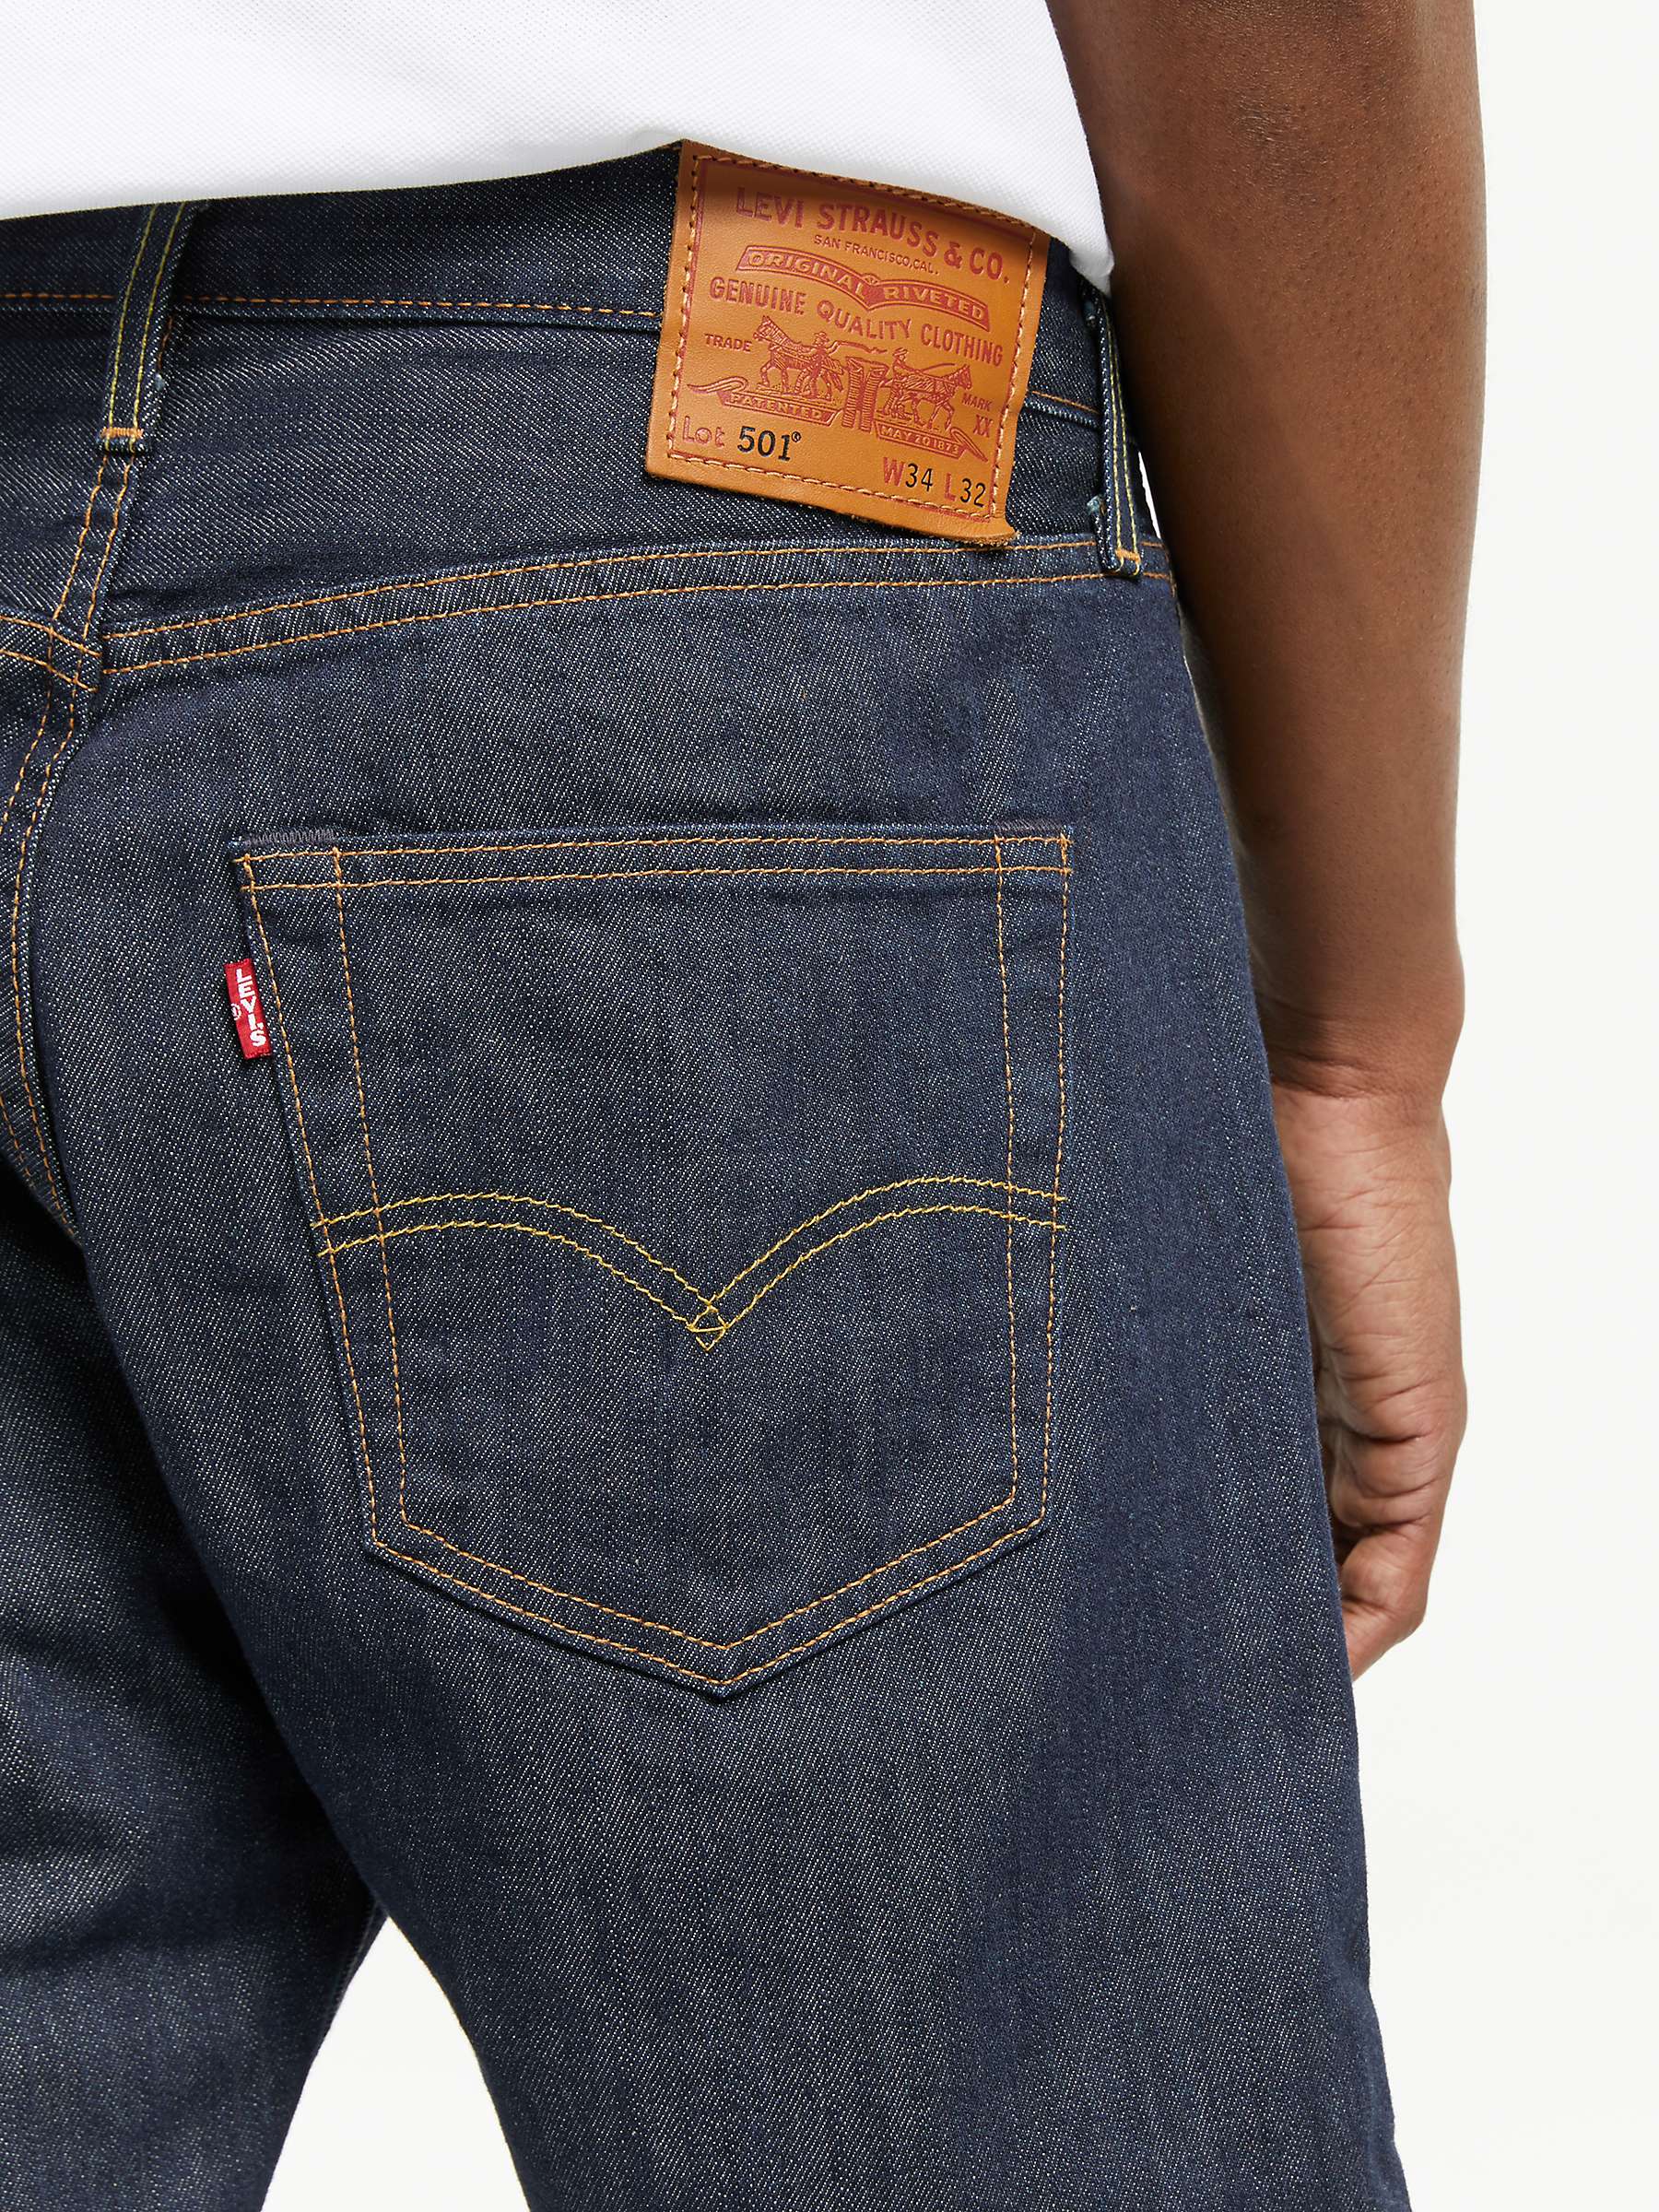 Buy Levi's 501 Original Straight Jeans, Marlon Online at johnlewis.com